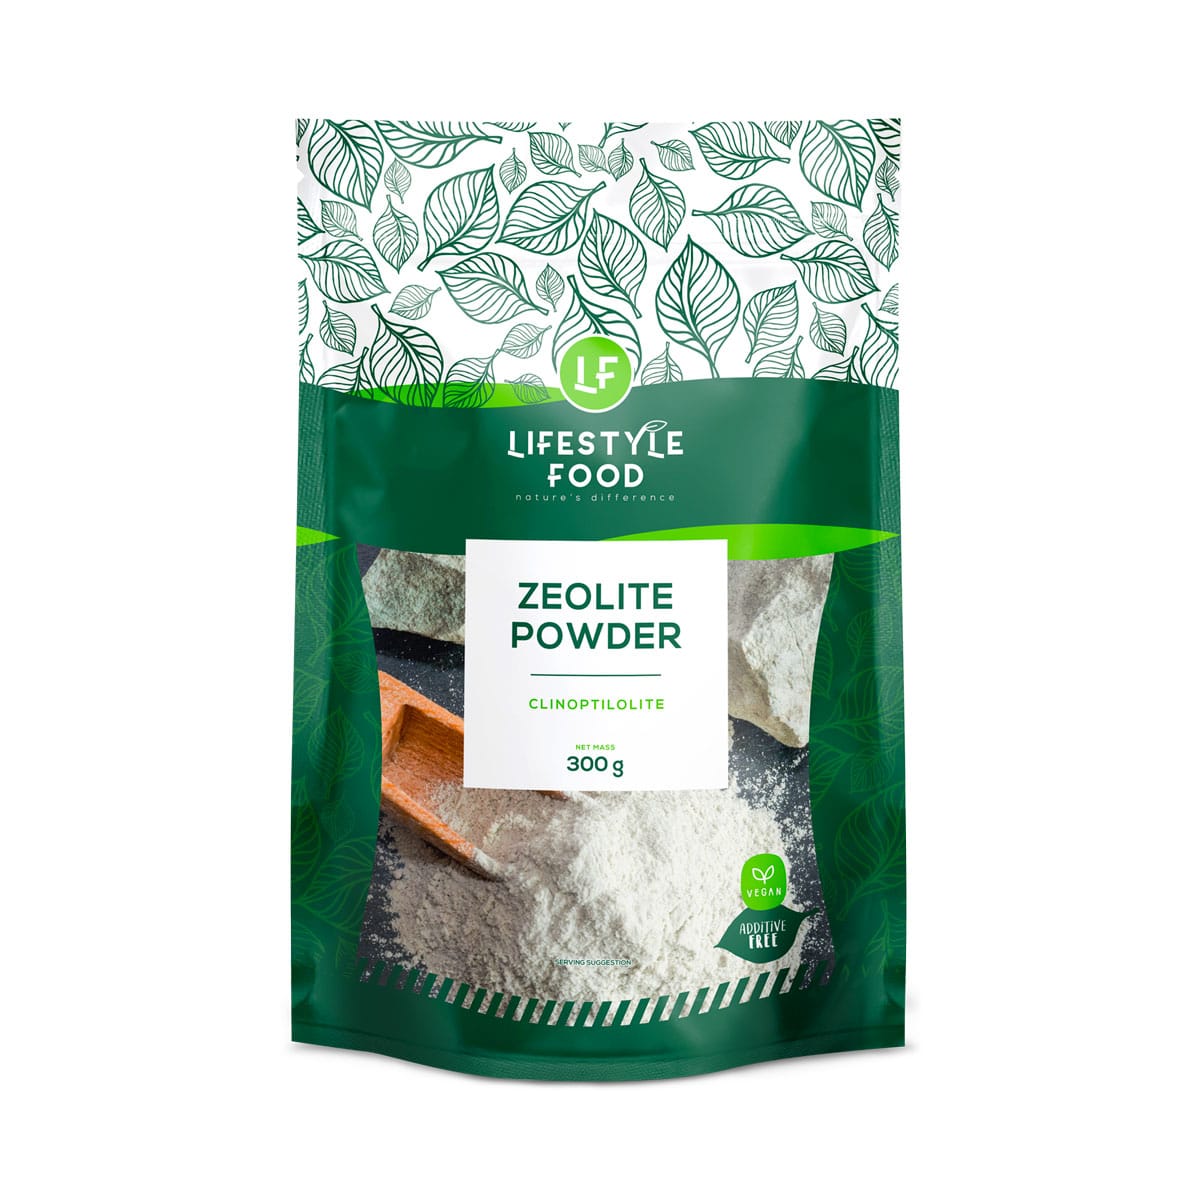 Lifestyle Food Zeolite Powder - 300g